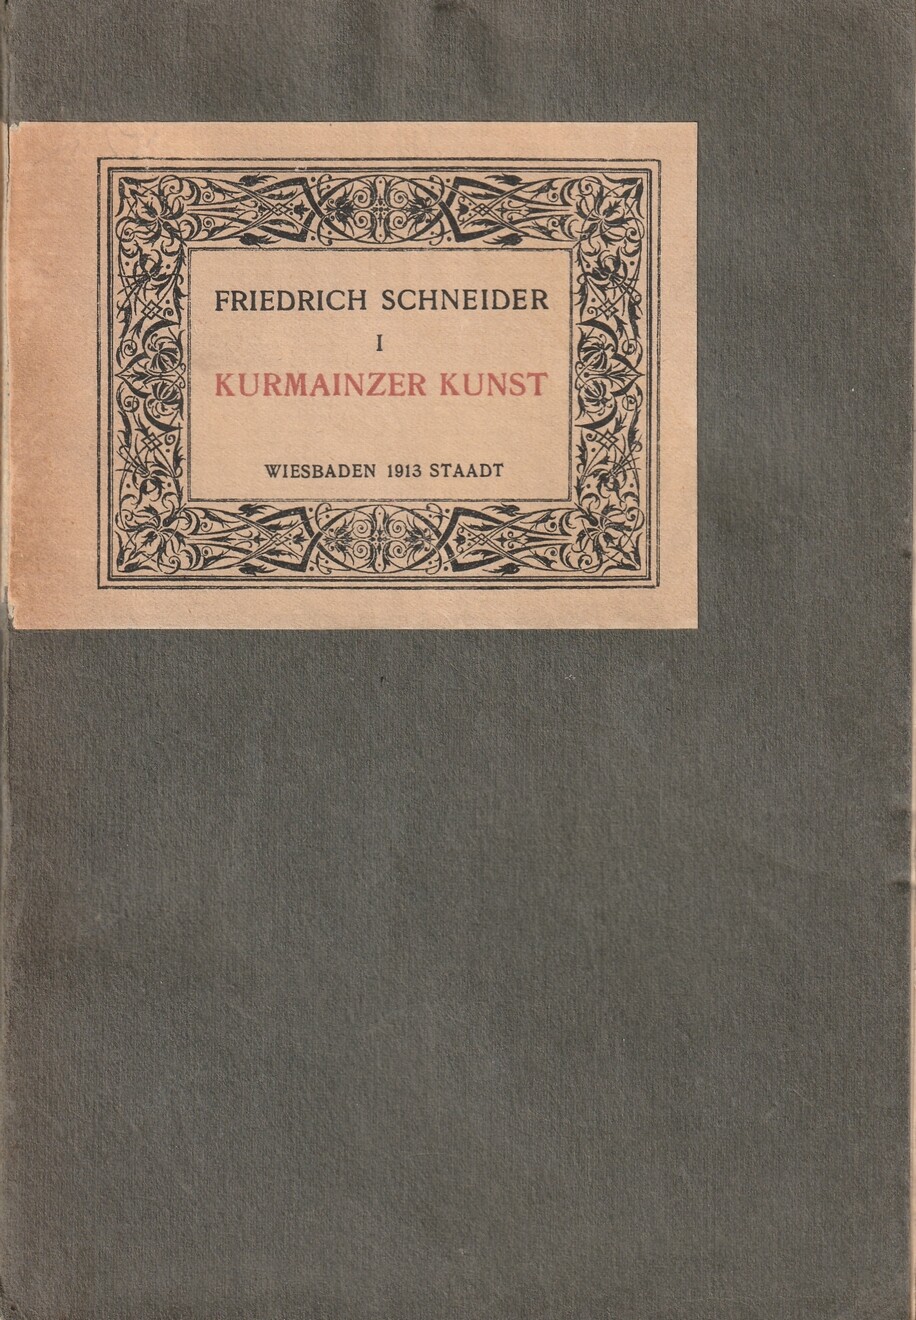 Kurmainzer Kunst I (Kulturverein Guntersblum CC BY-NC-SA)